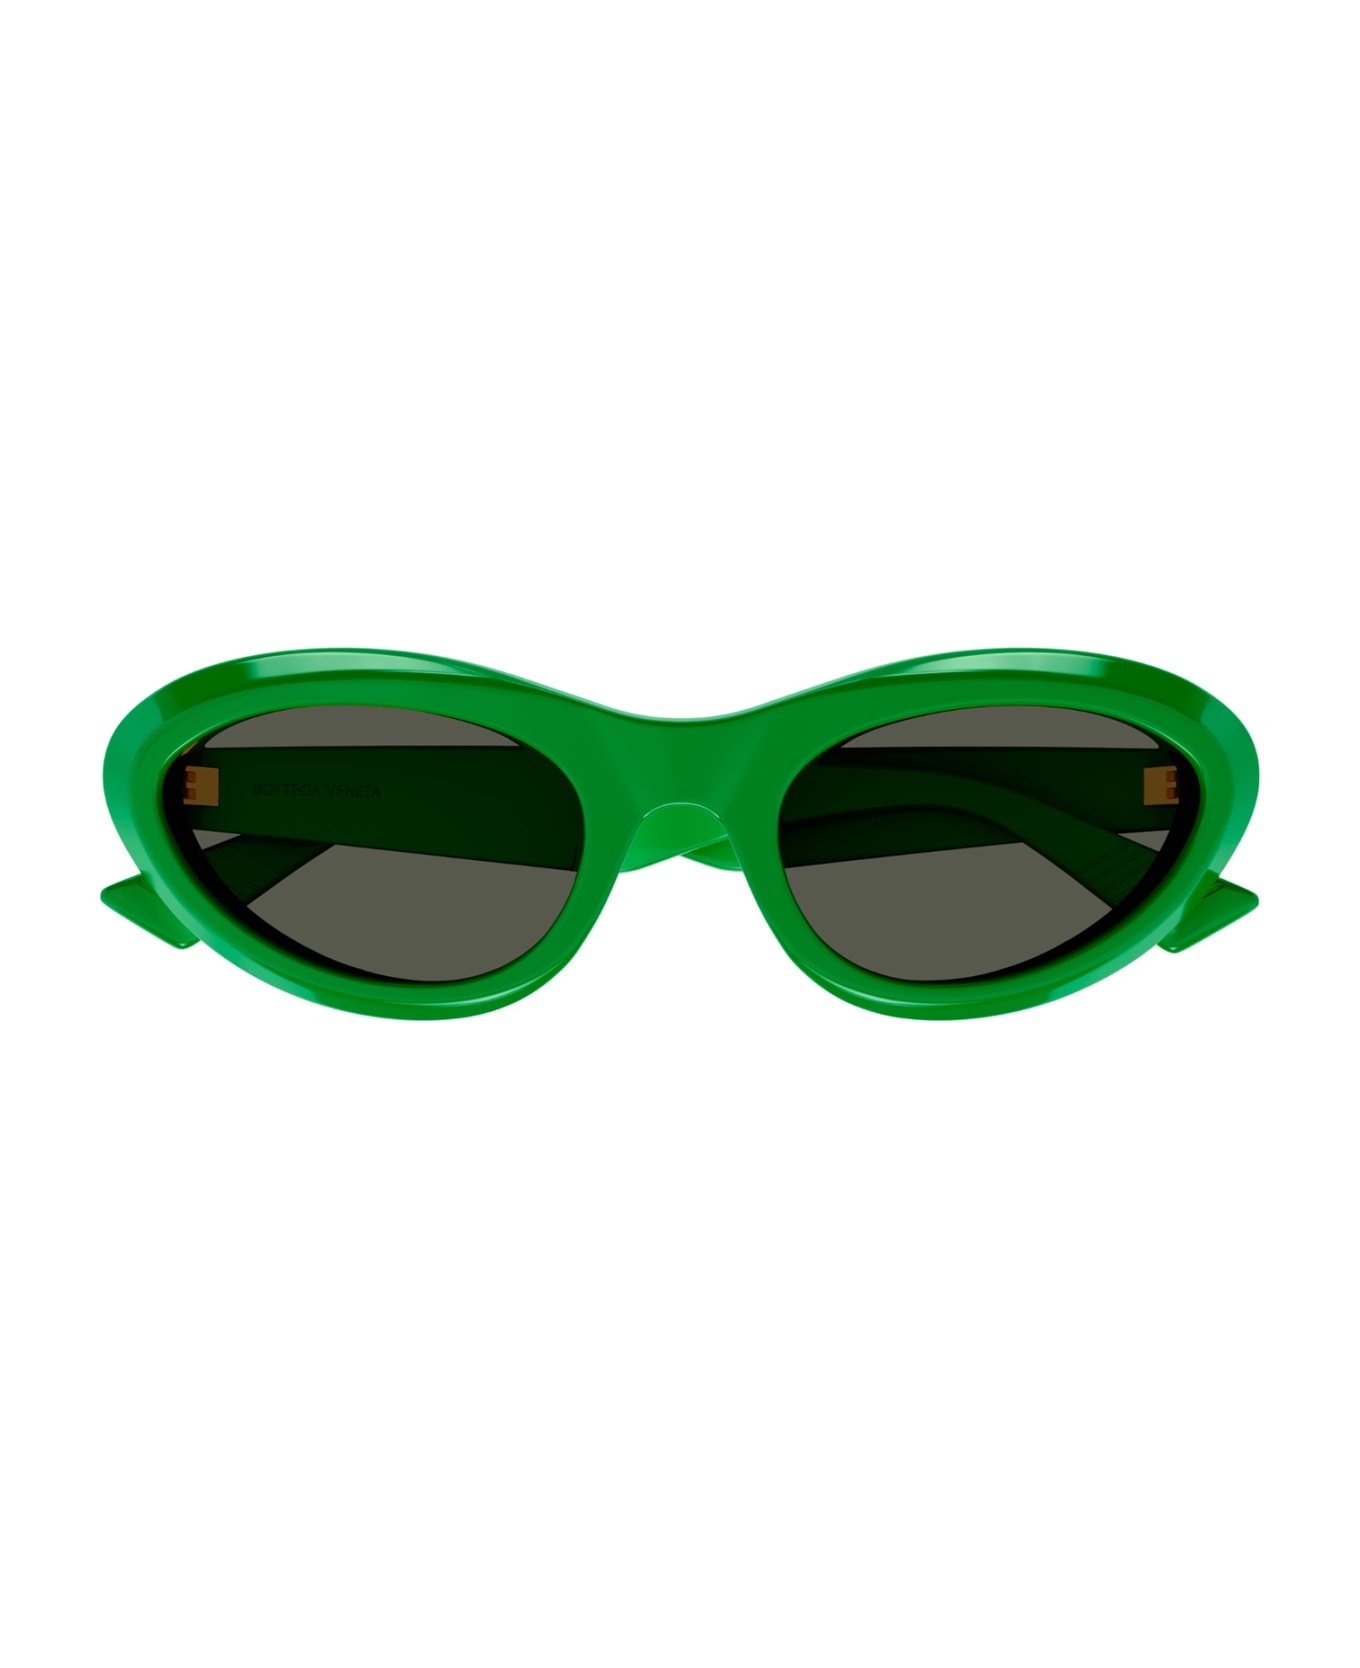 Bottega Veneta Eyewear 1egg4jb0a - 003 green green green